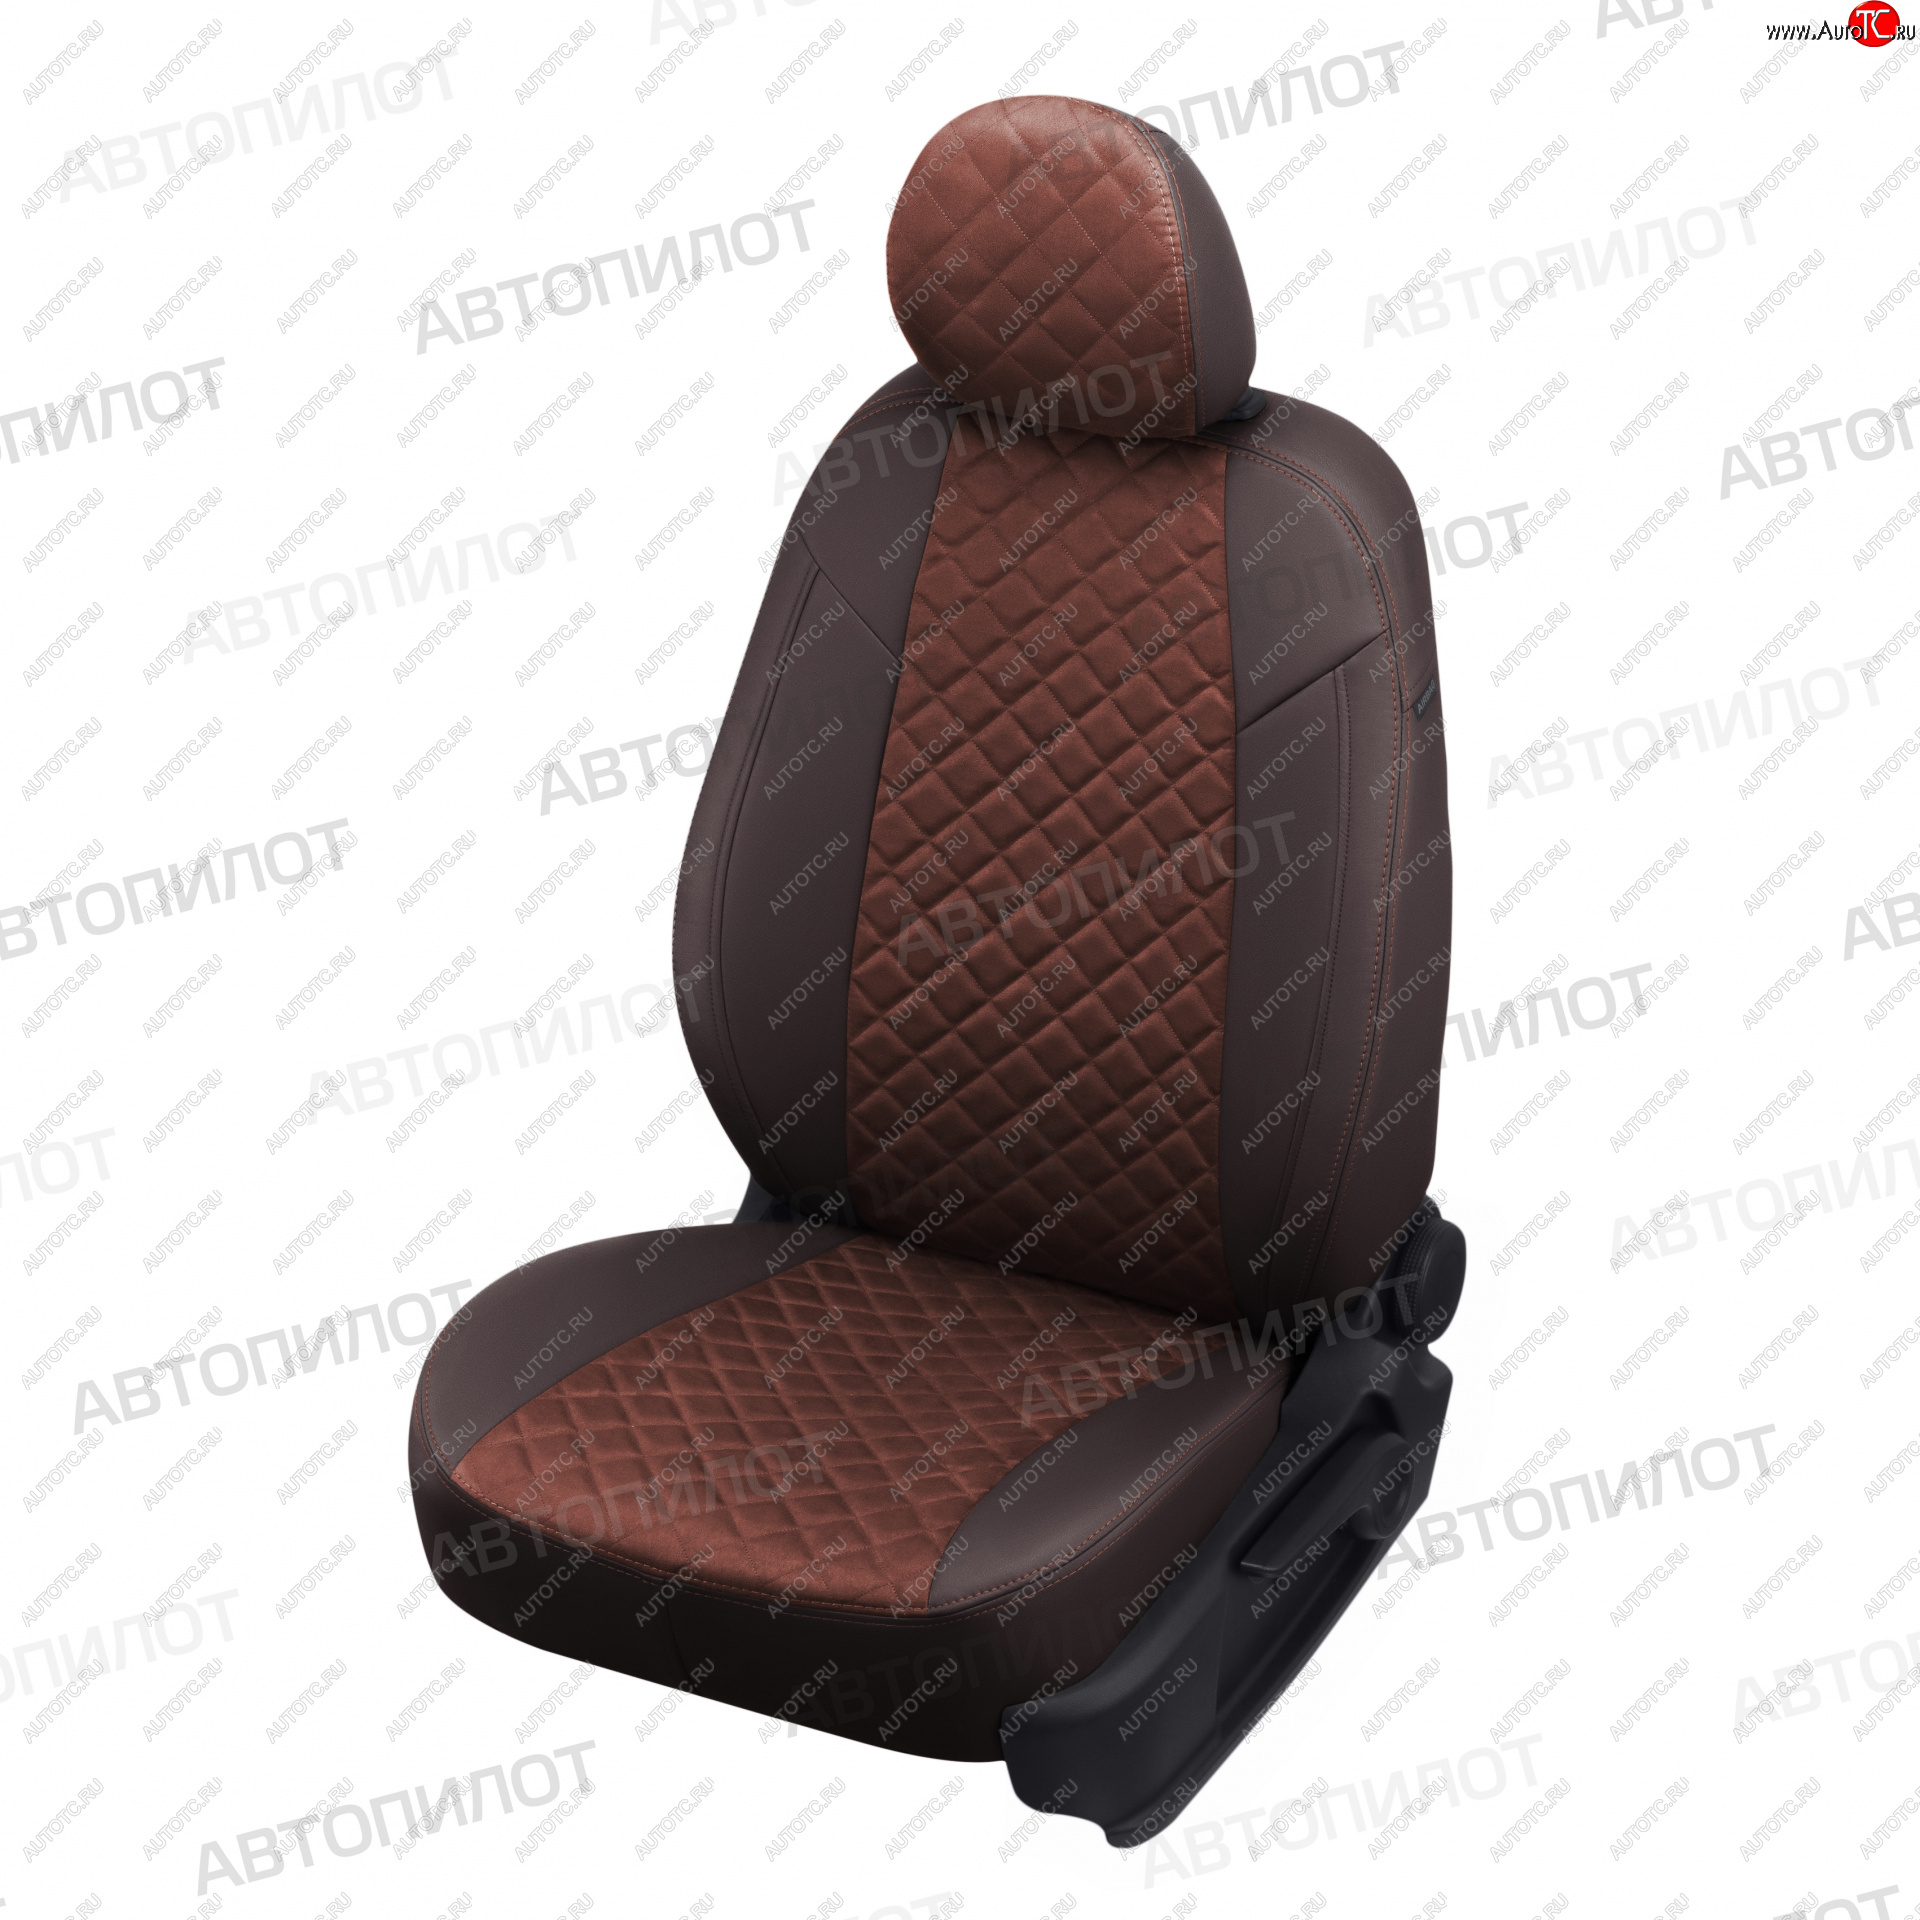 13 999 р. Чехлы сидений (экокожа/алькантара, 40/60) Автопилот Ромб  Audi A6  C6 (2004-2010) (шоколад)